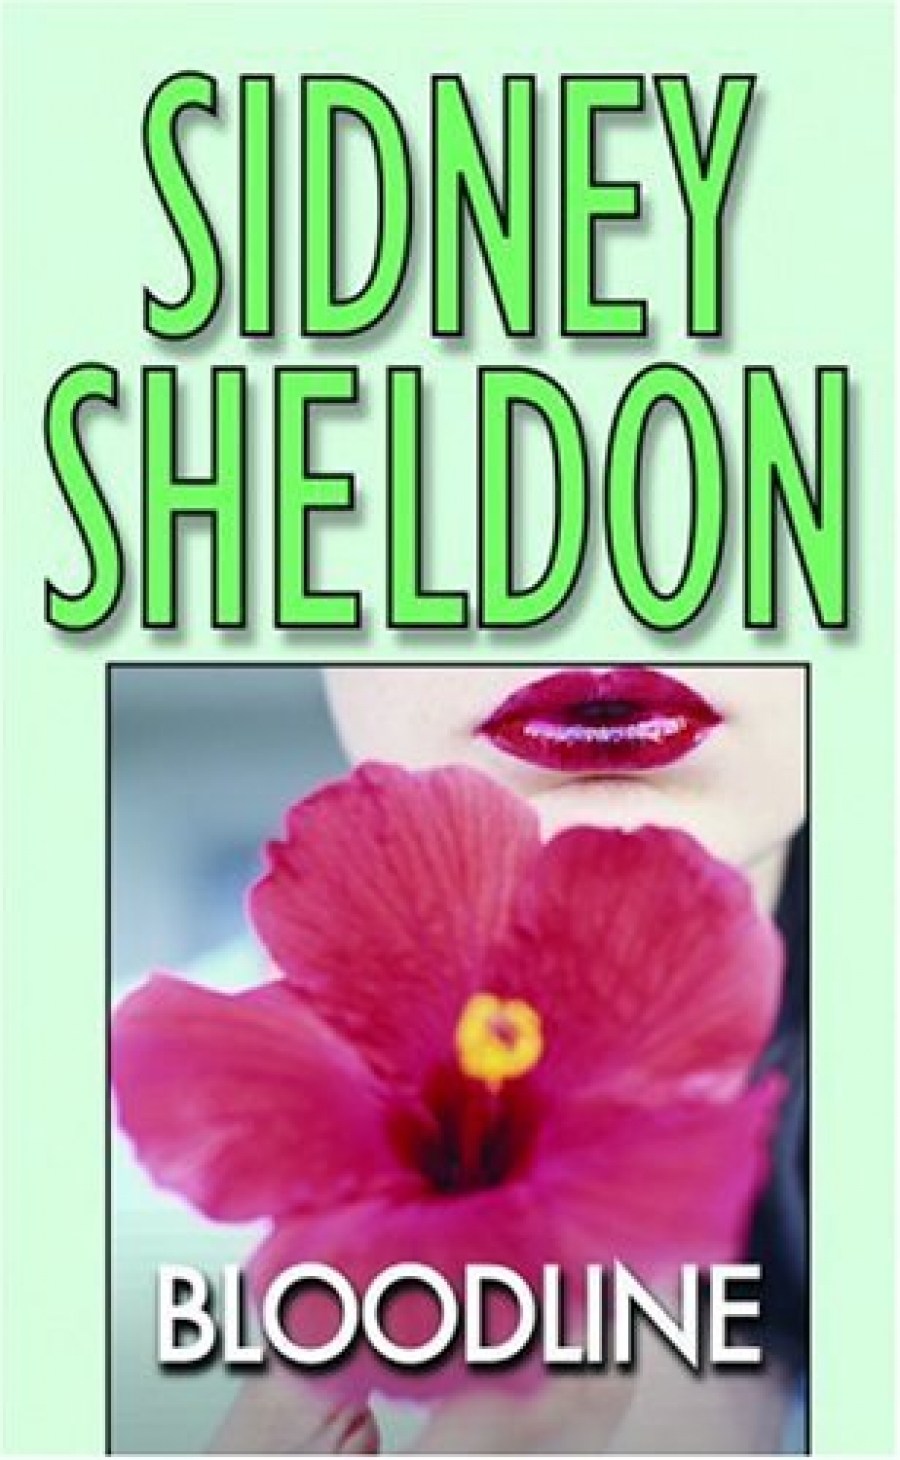 Sheldon Sidney Bloodline 